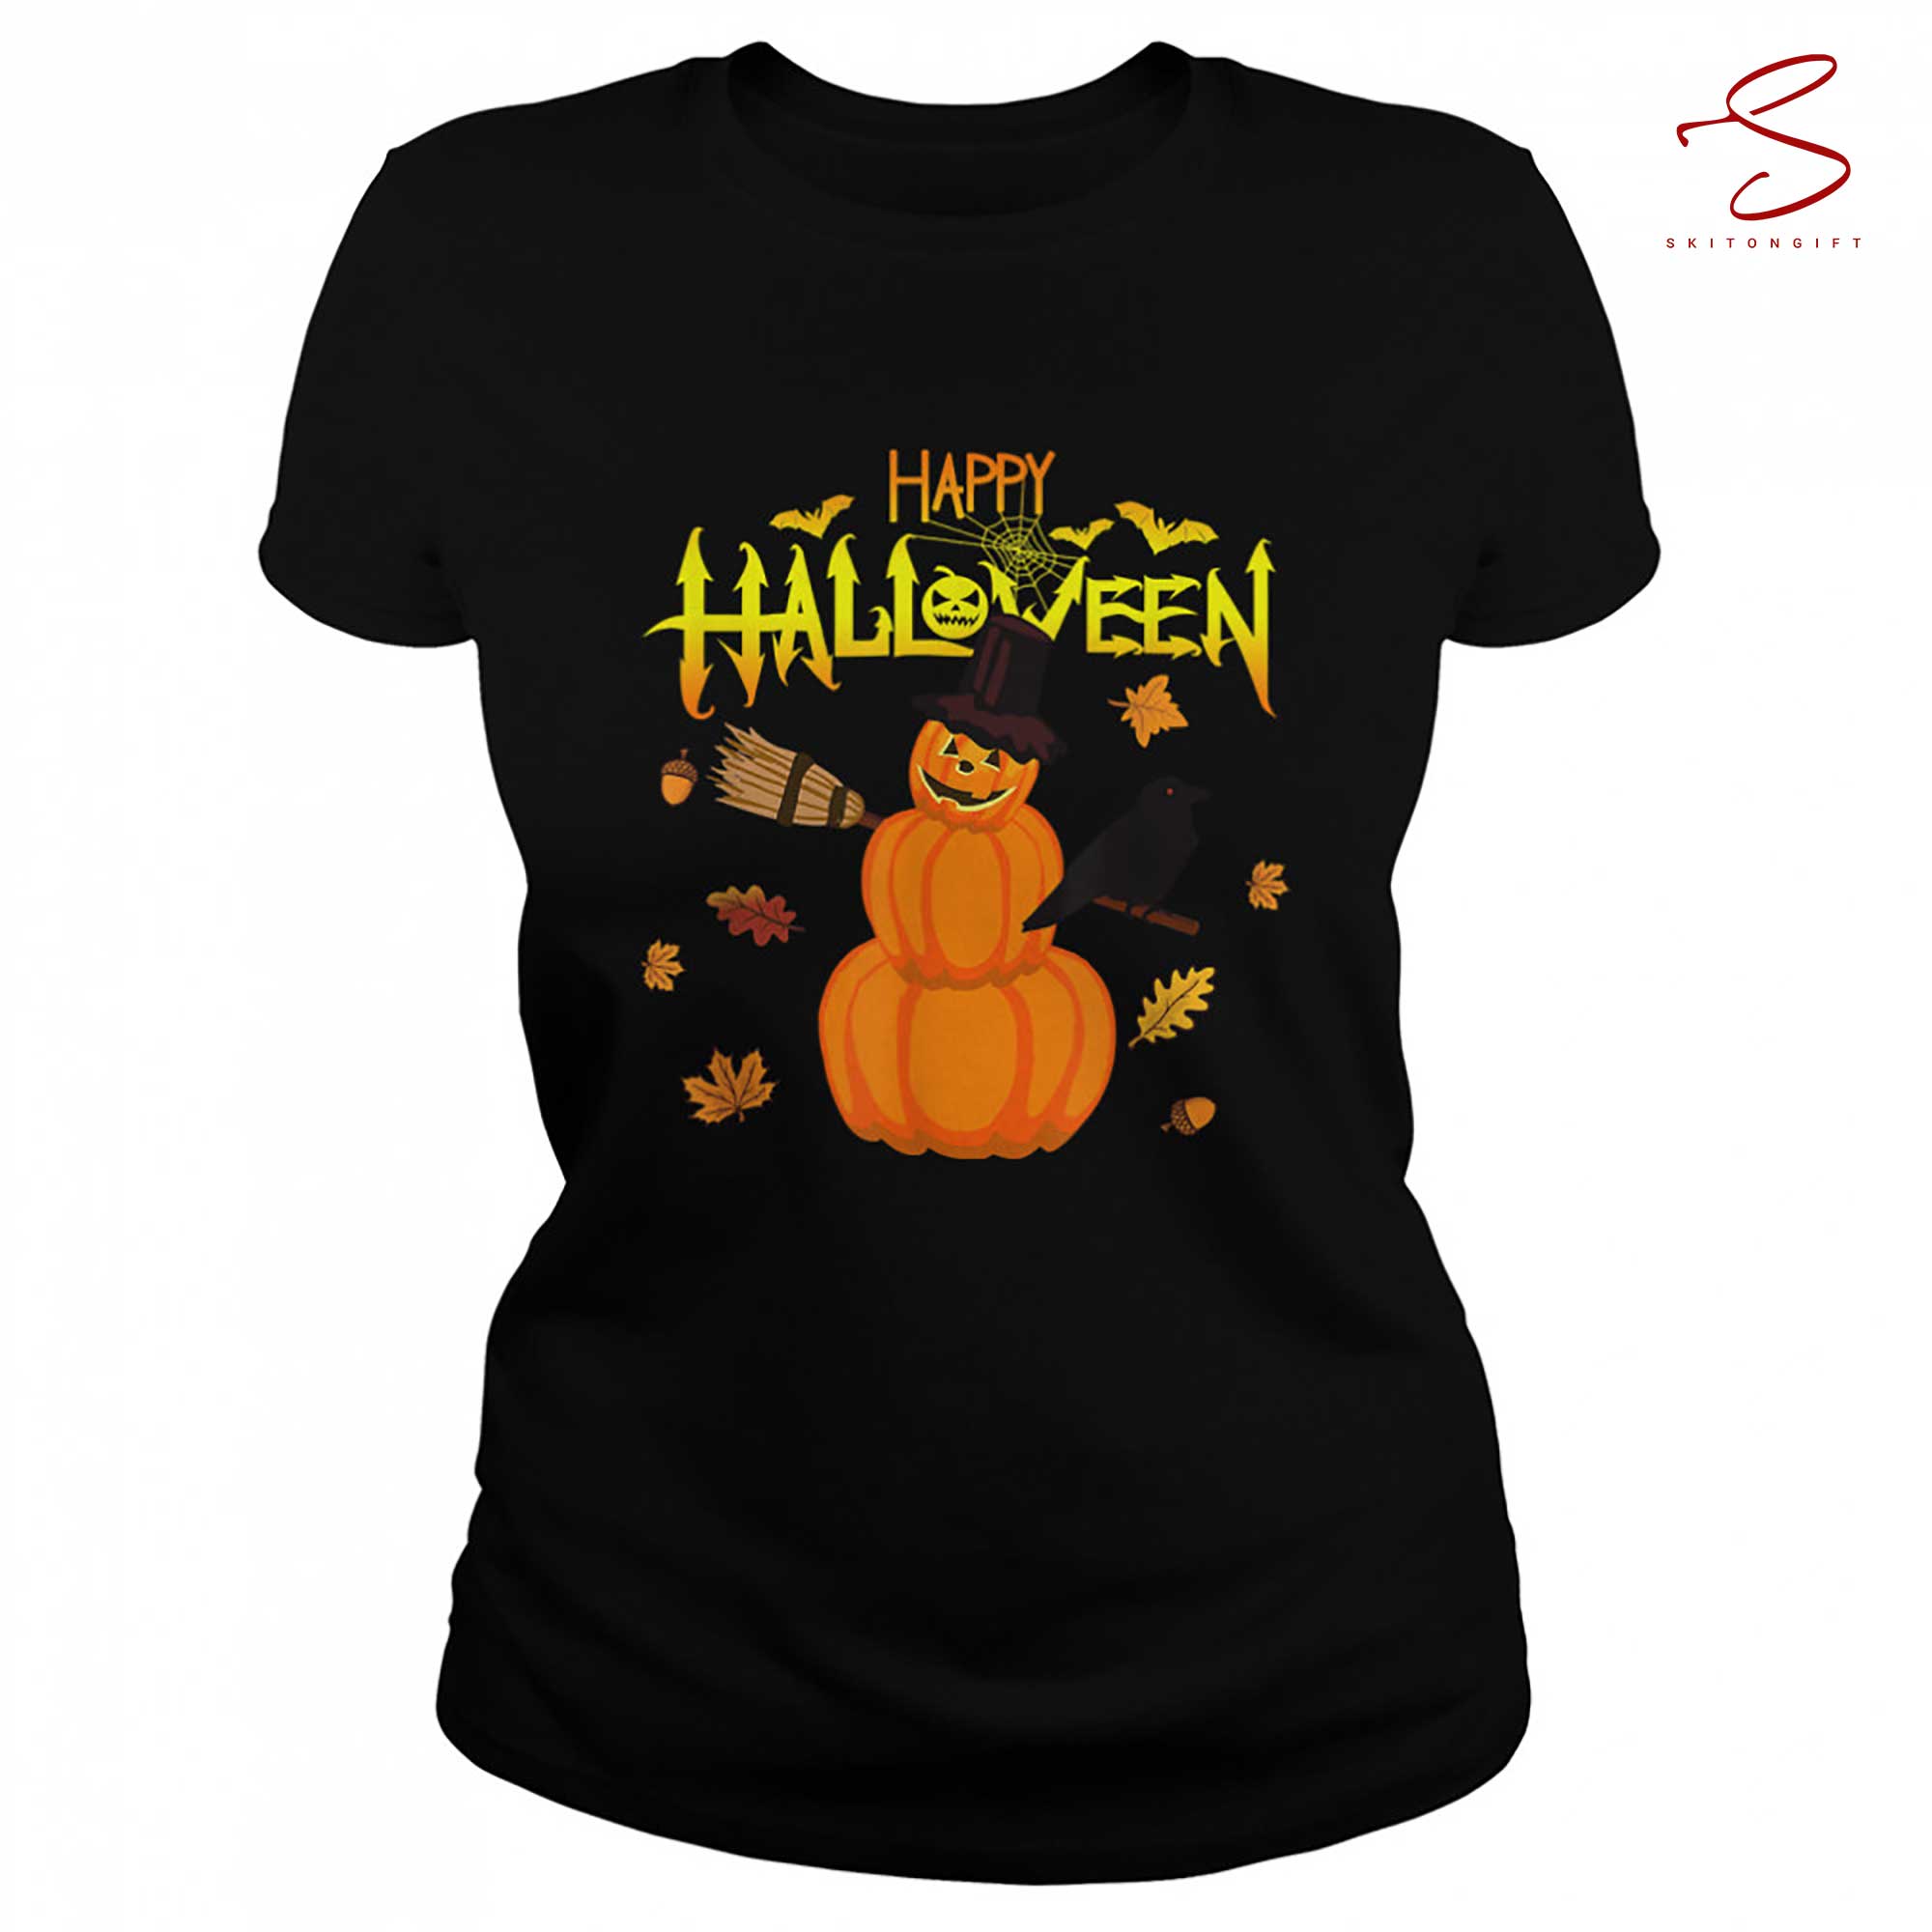 Skitongift Trick Or Treat Halloween Shirt Pumpkin Happy Halloween T Shirt